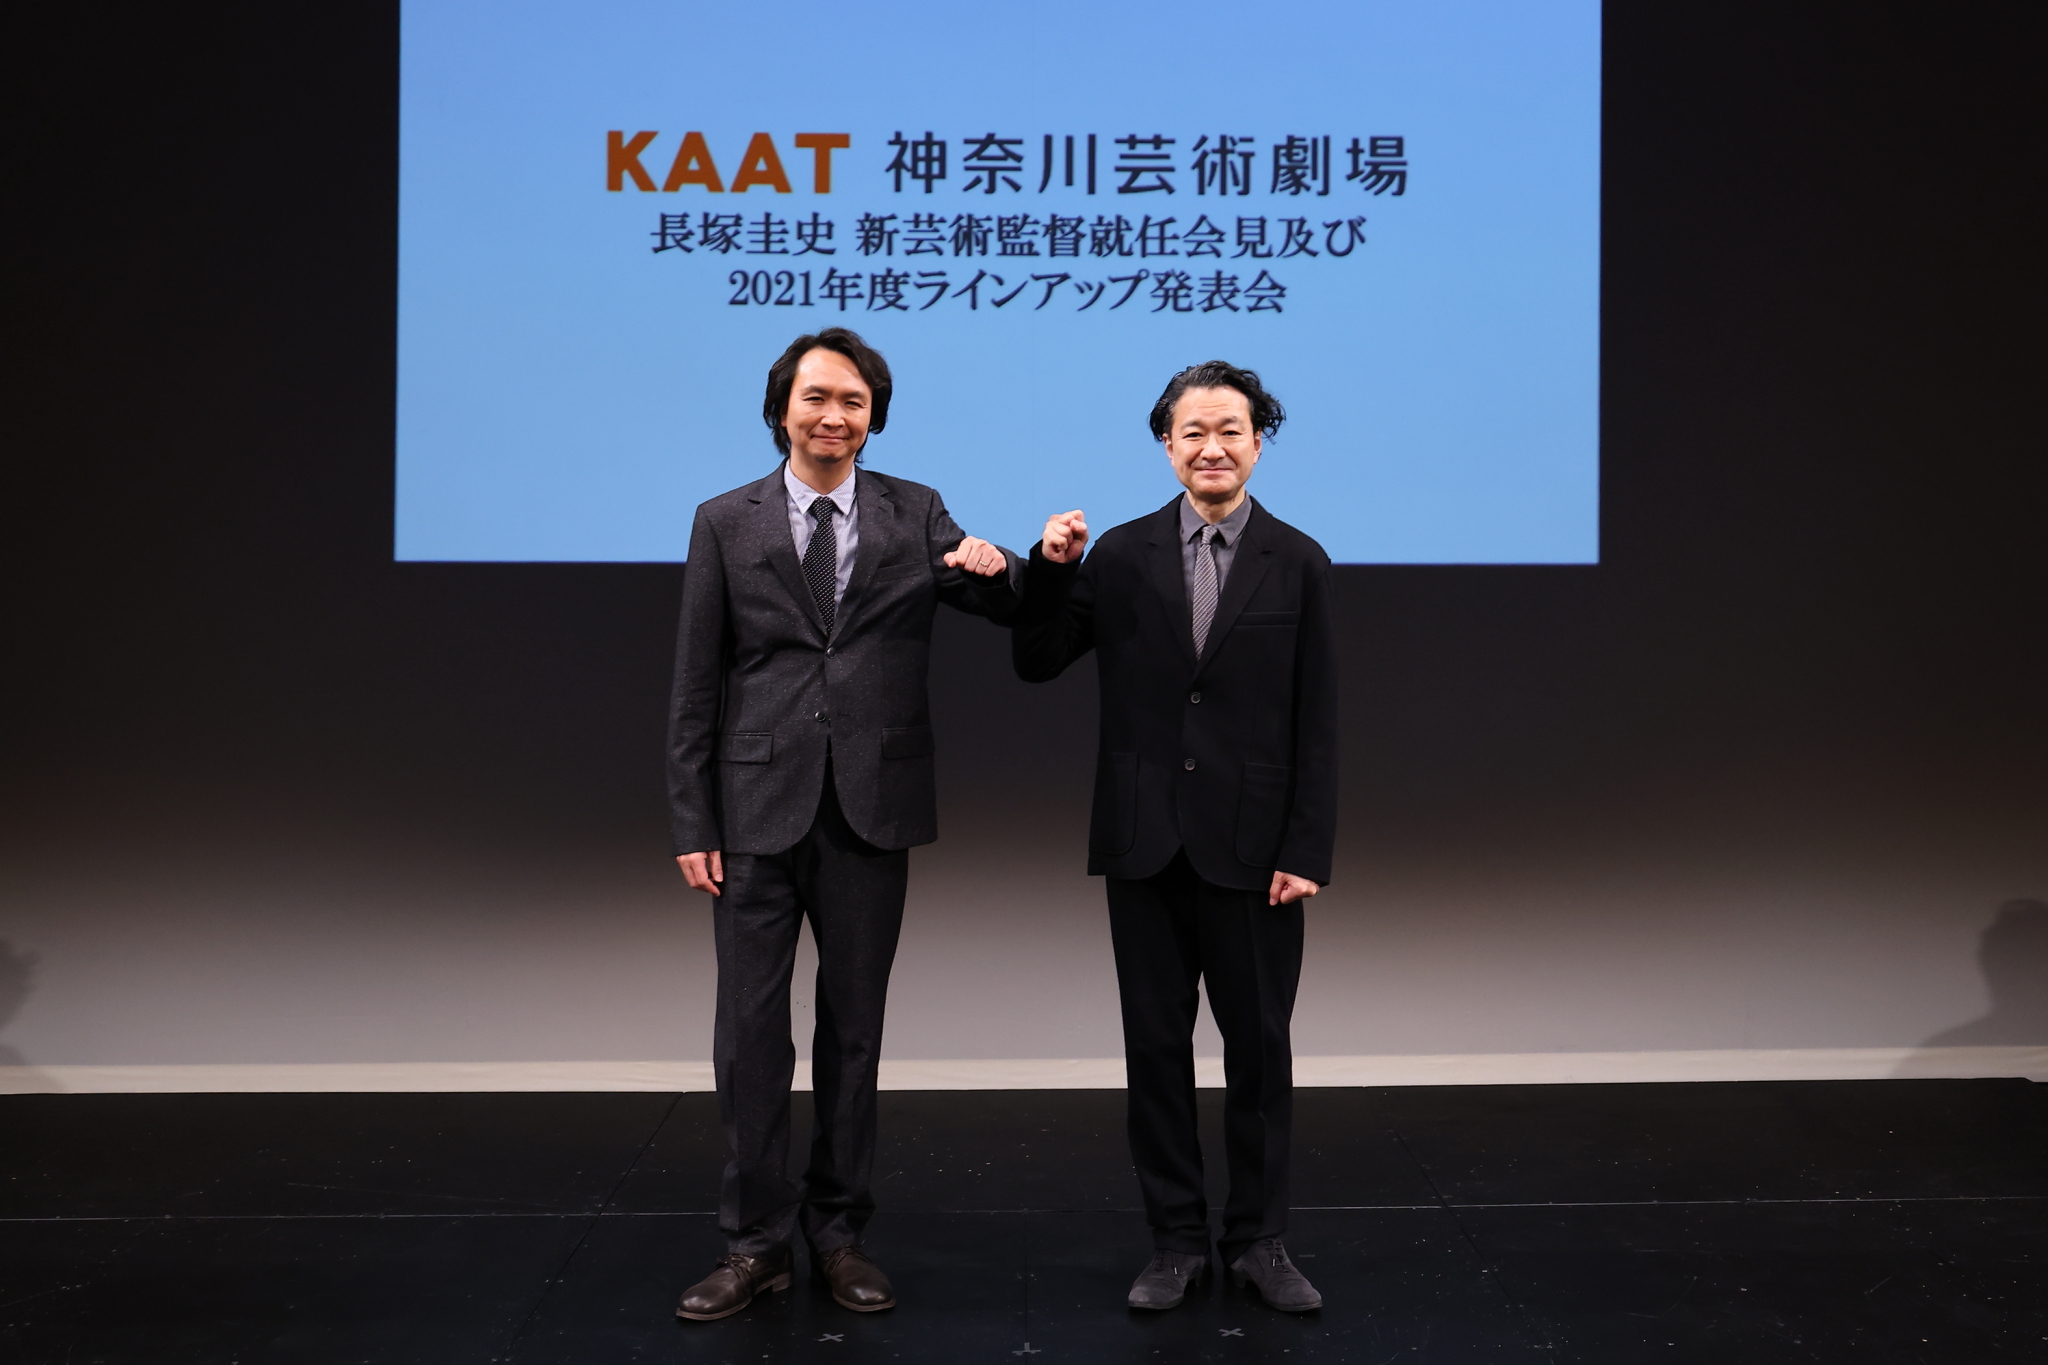 KAAT 2021 program announcement Nagatsuka and Shirai